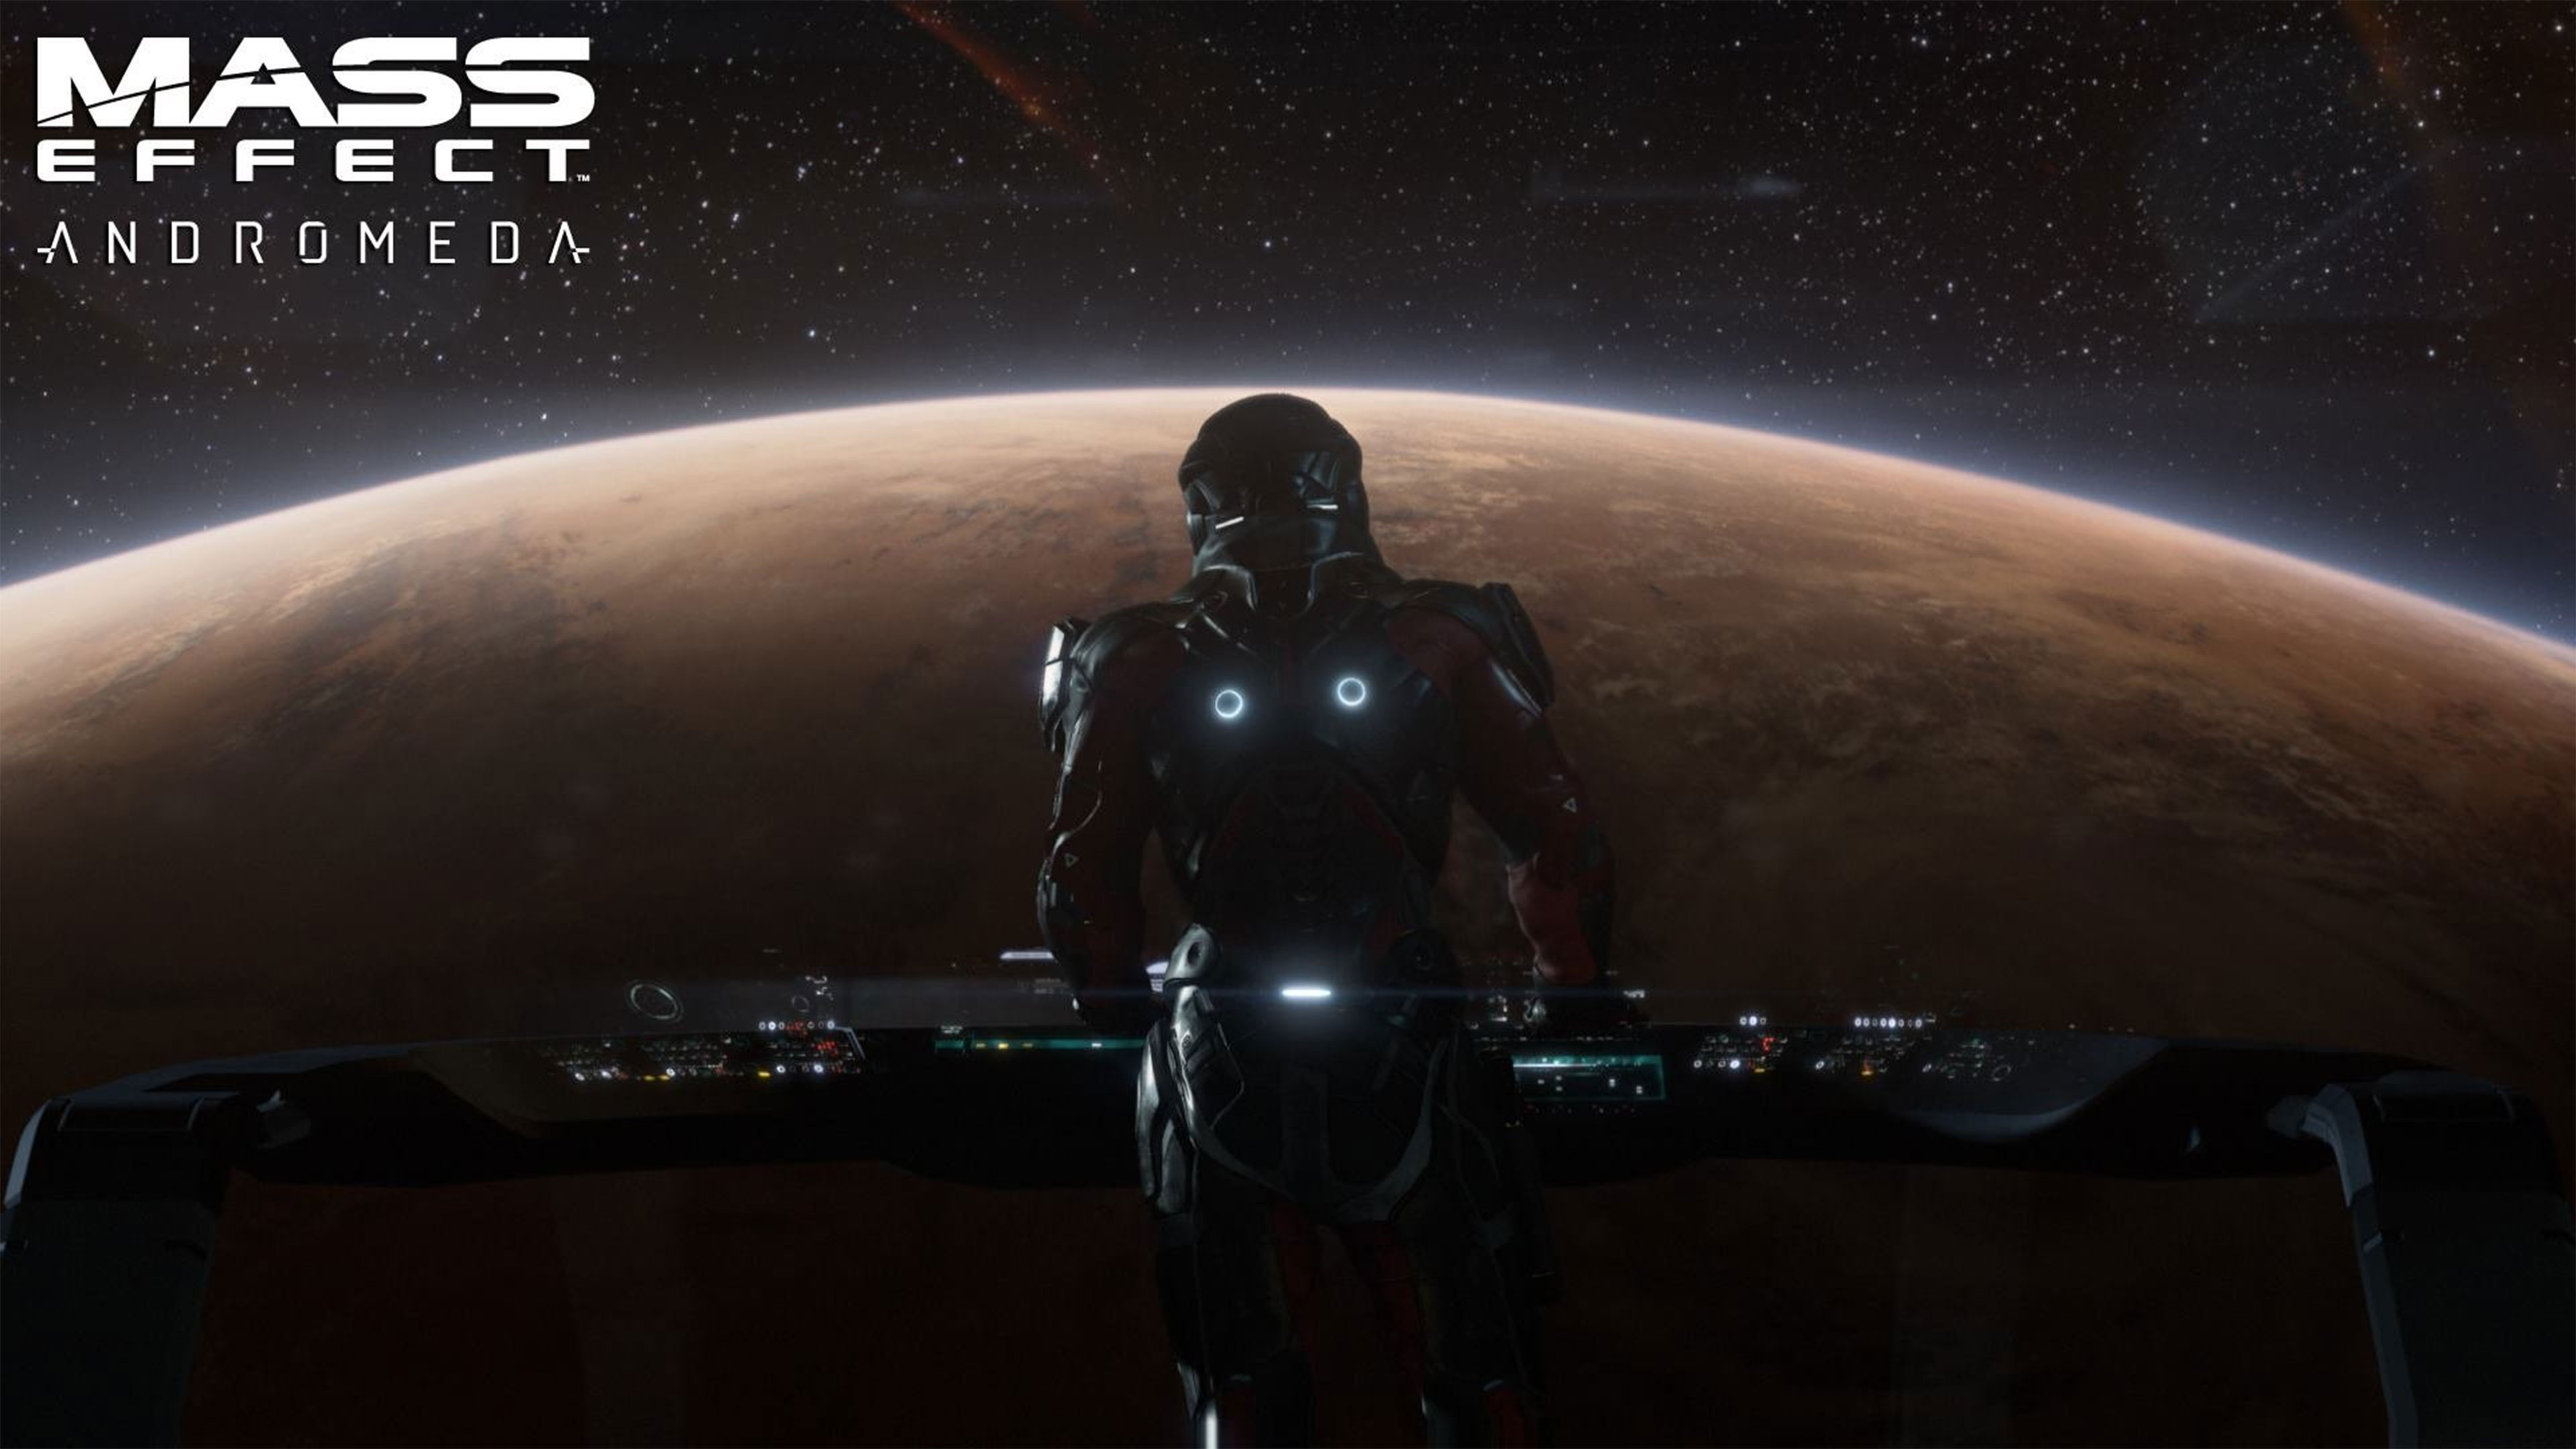 Mass Effect Andromeda Wallpapers in Ultra HD | 4K - Gameranx